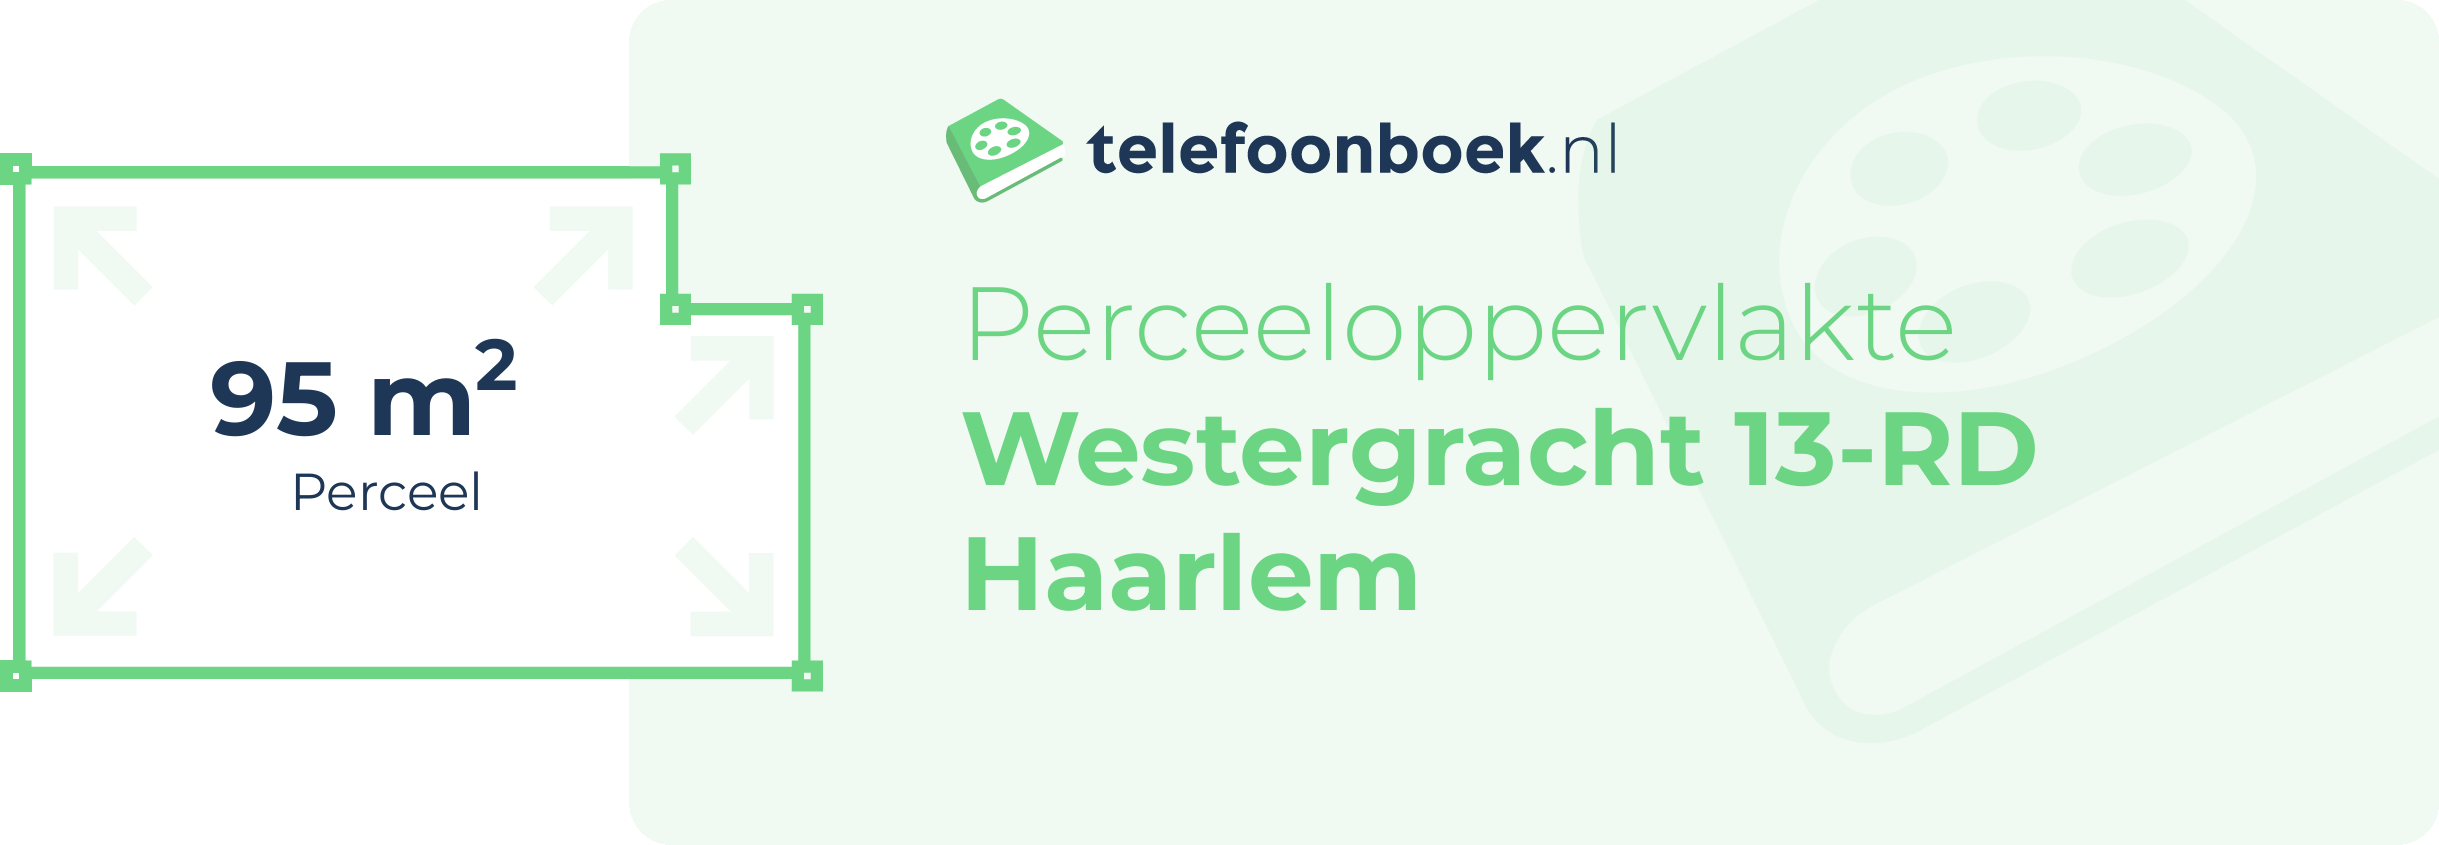 Perceeloppervlakte Westergracht 13-RD Haarlem